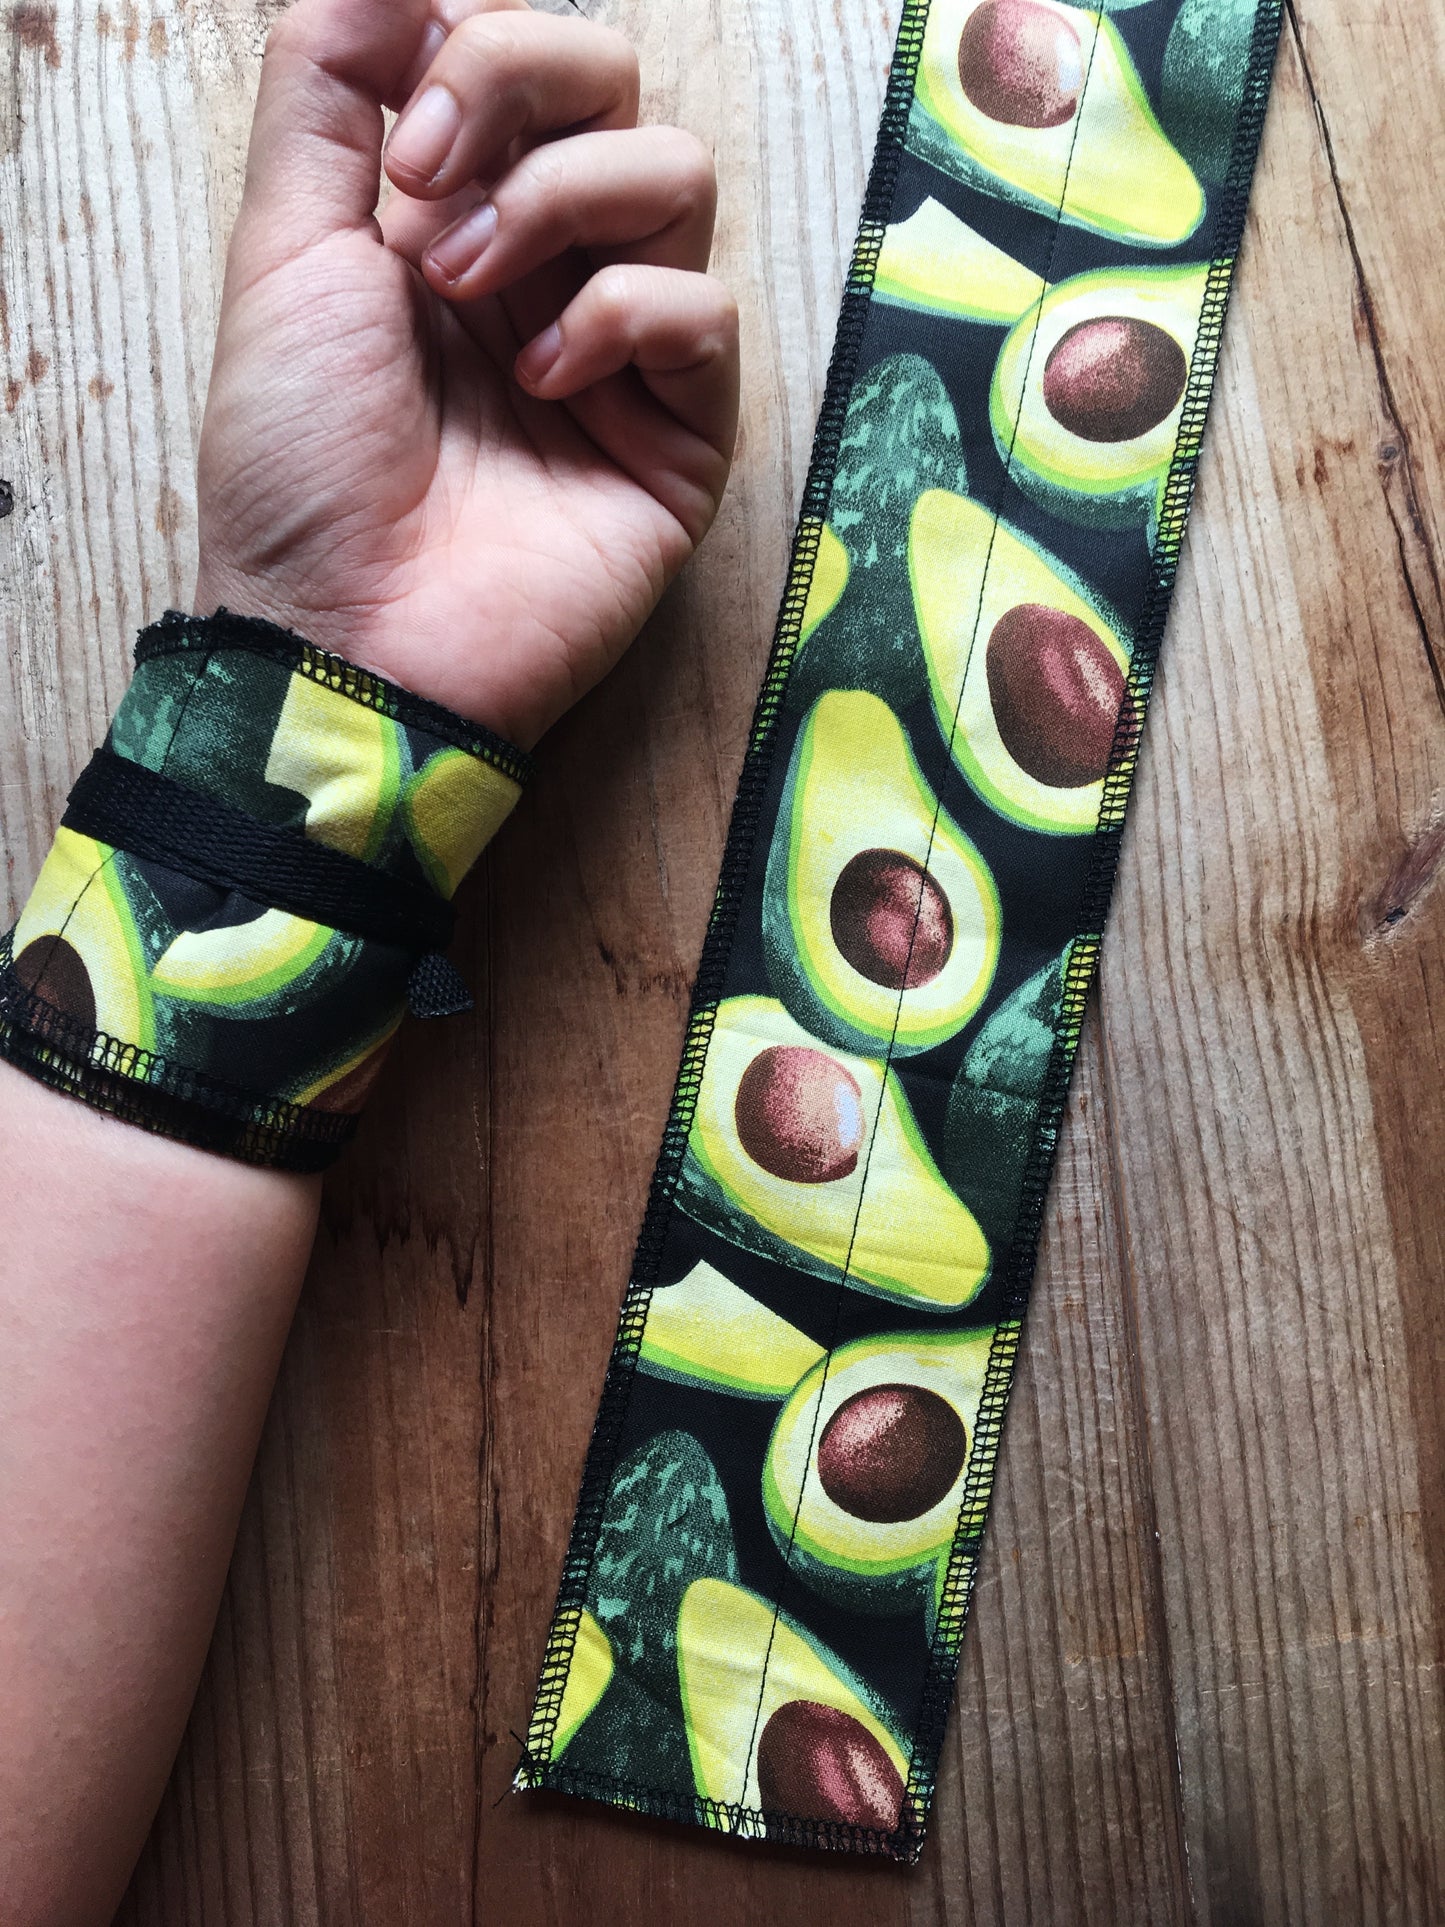 big avocado wrist wraps for crossfit weightlifting  